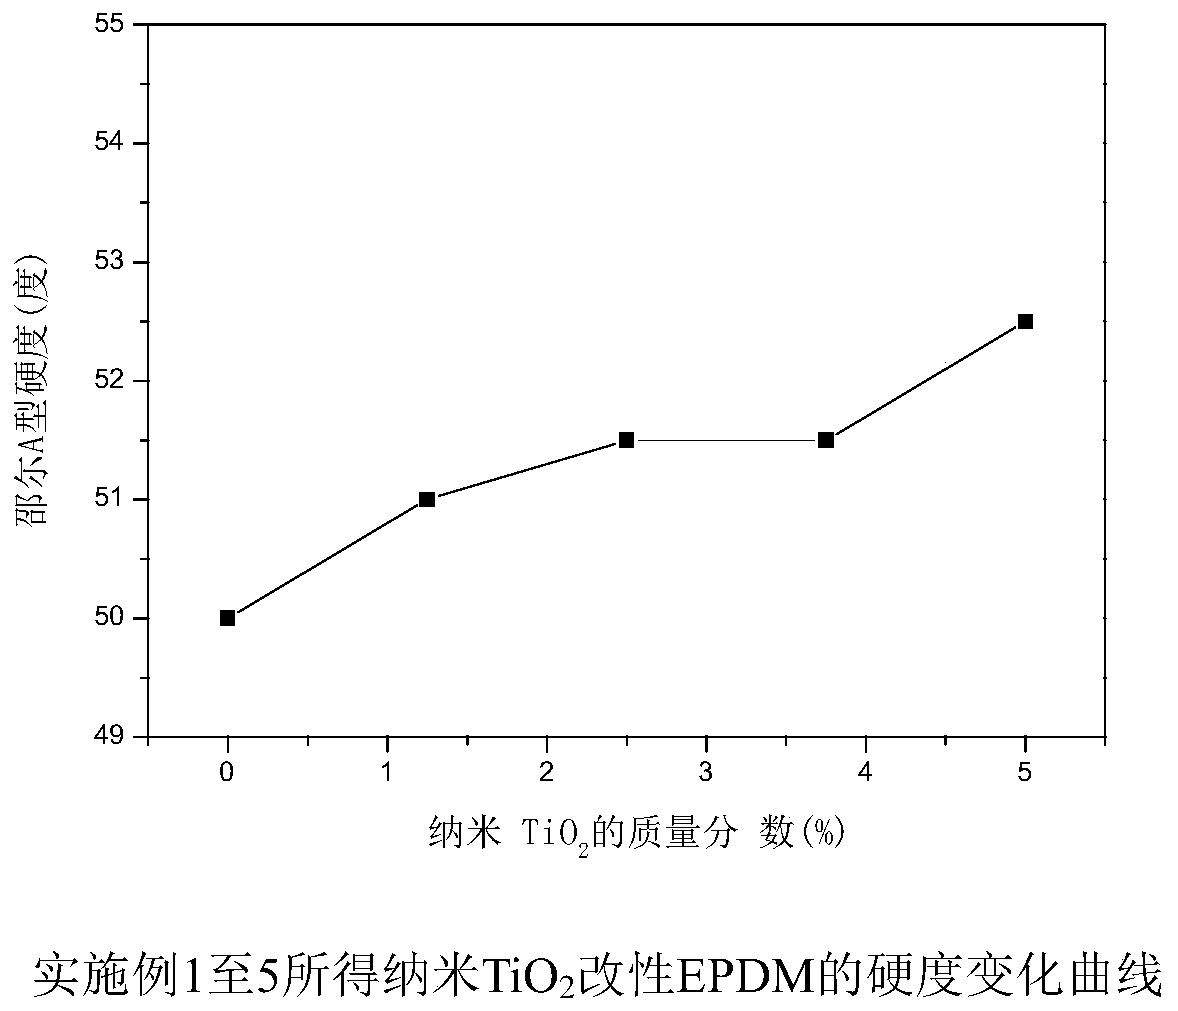 Nano TiO2 modified EPDM (ethylene propylene diene monomer) and preparation method thereof